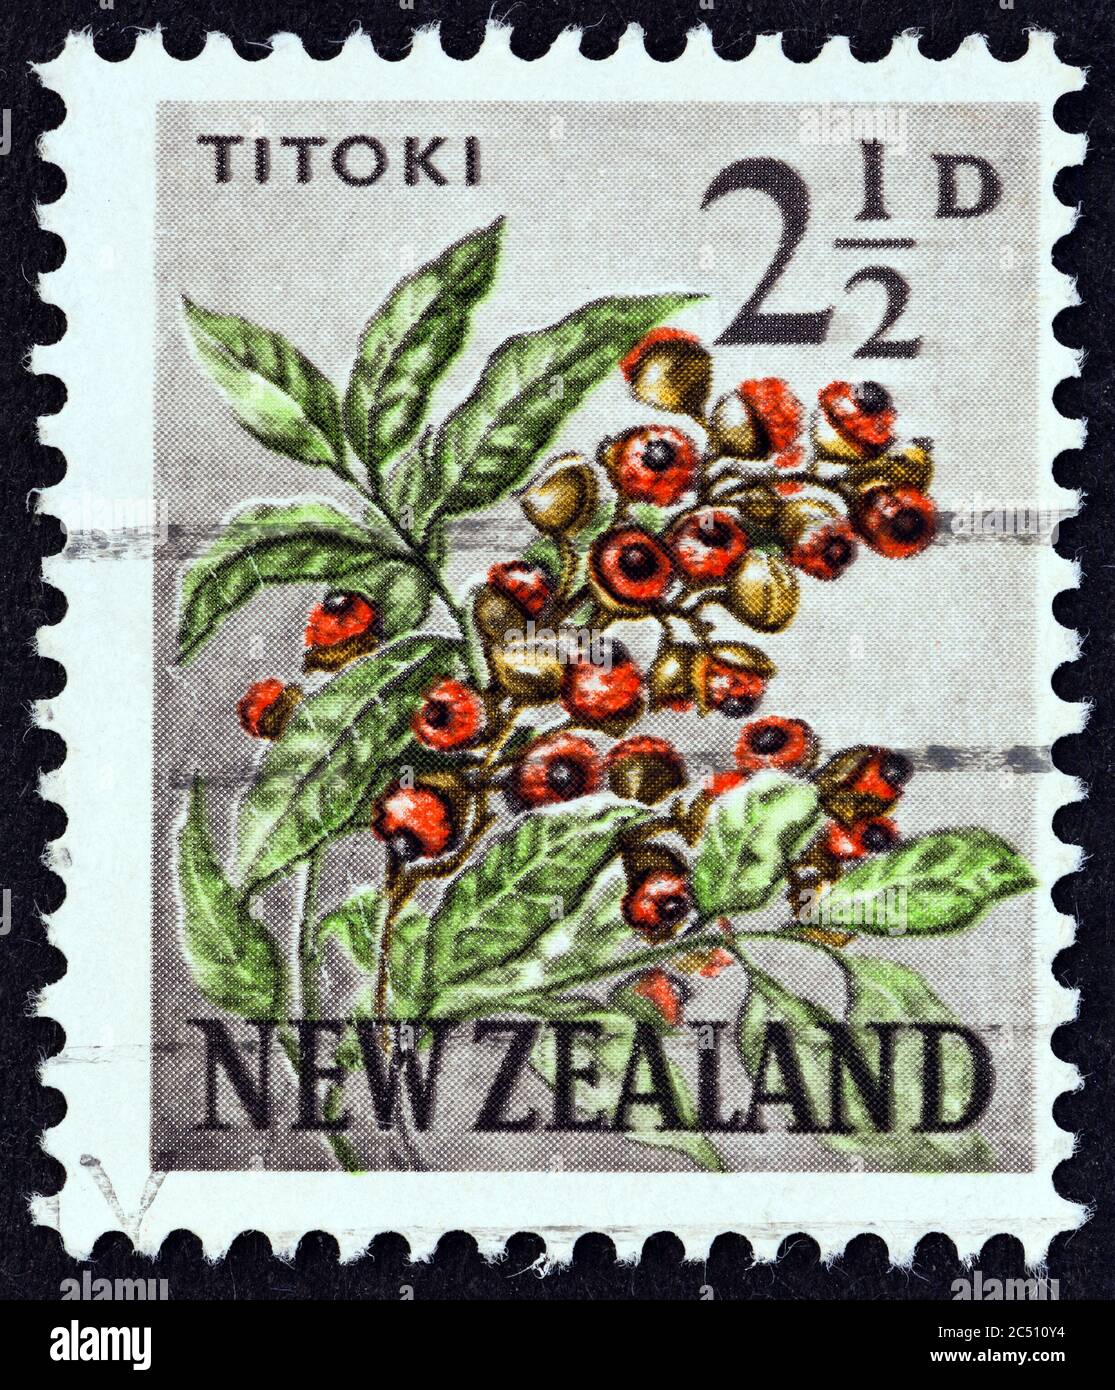 NEW ZEALAND - CIRCA 1960: A stamp printed in New Zealand shows Titoki (Alectryon excelsum), circa 1960. Stock Photo